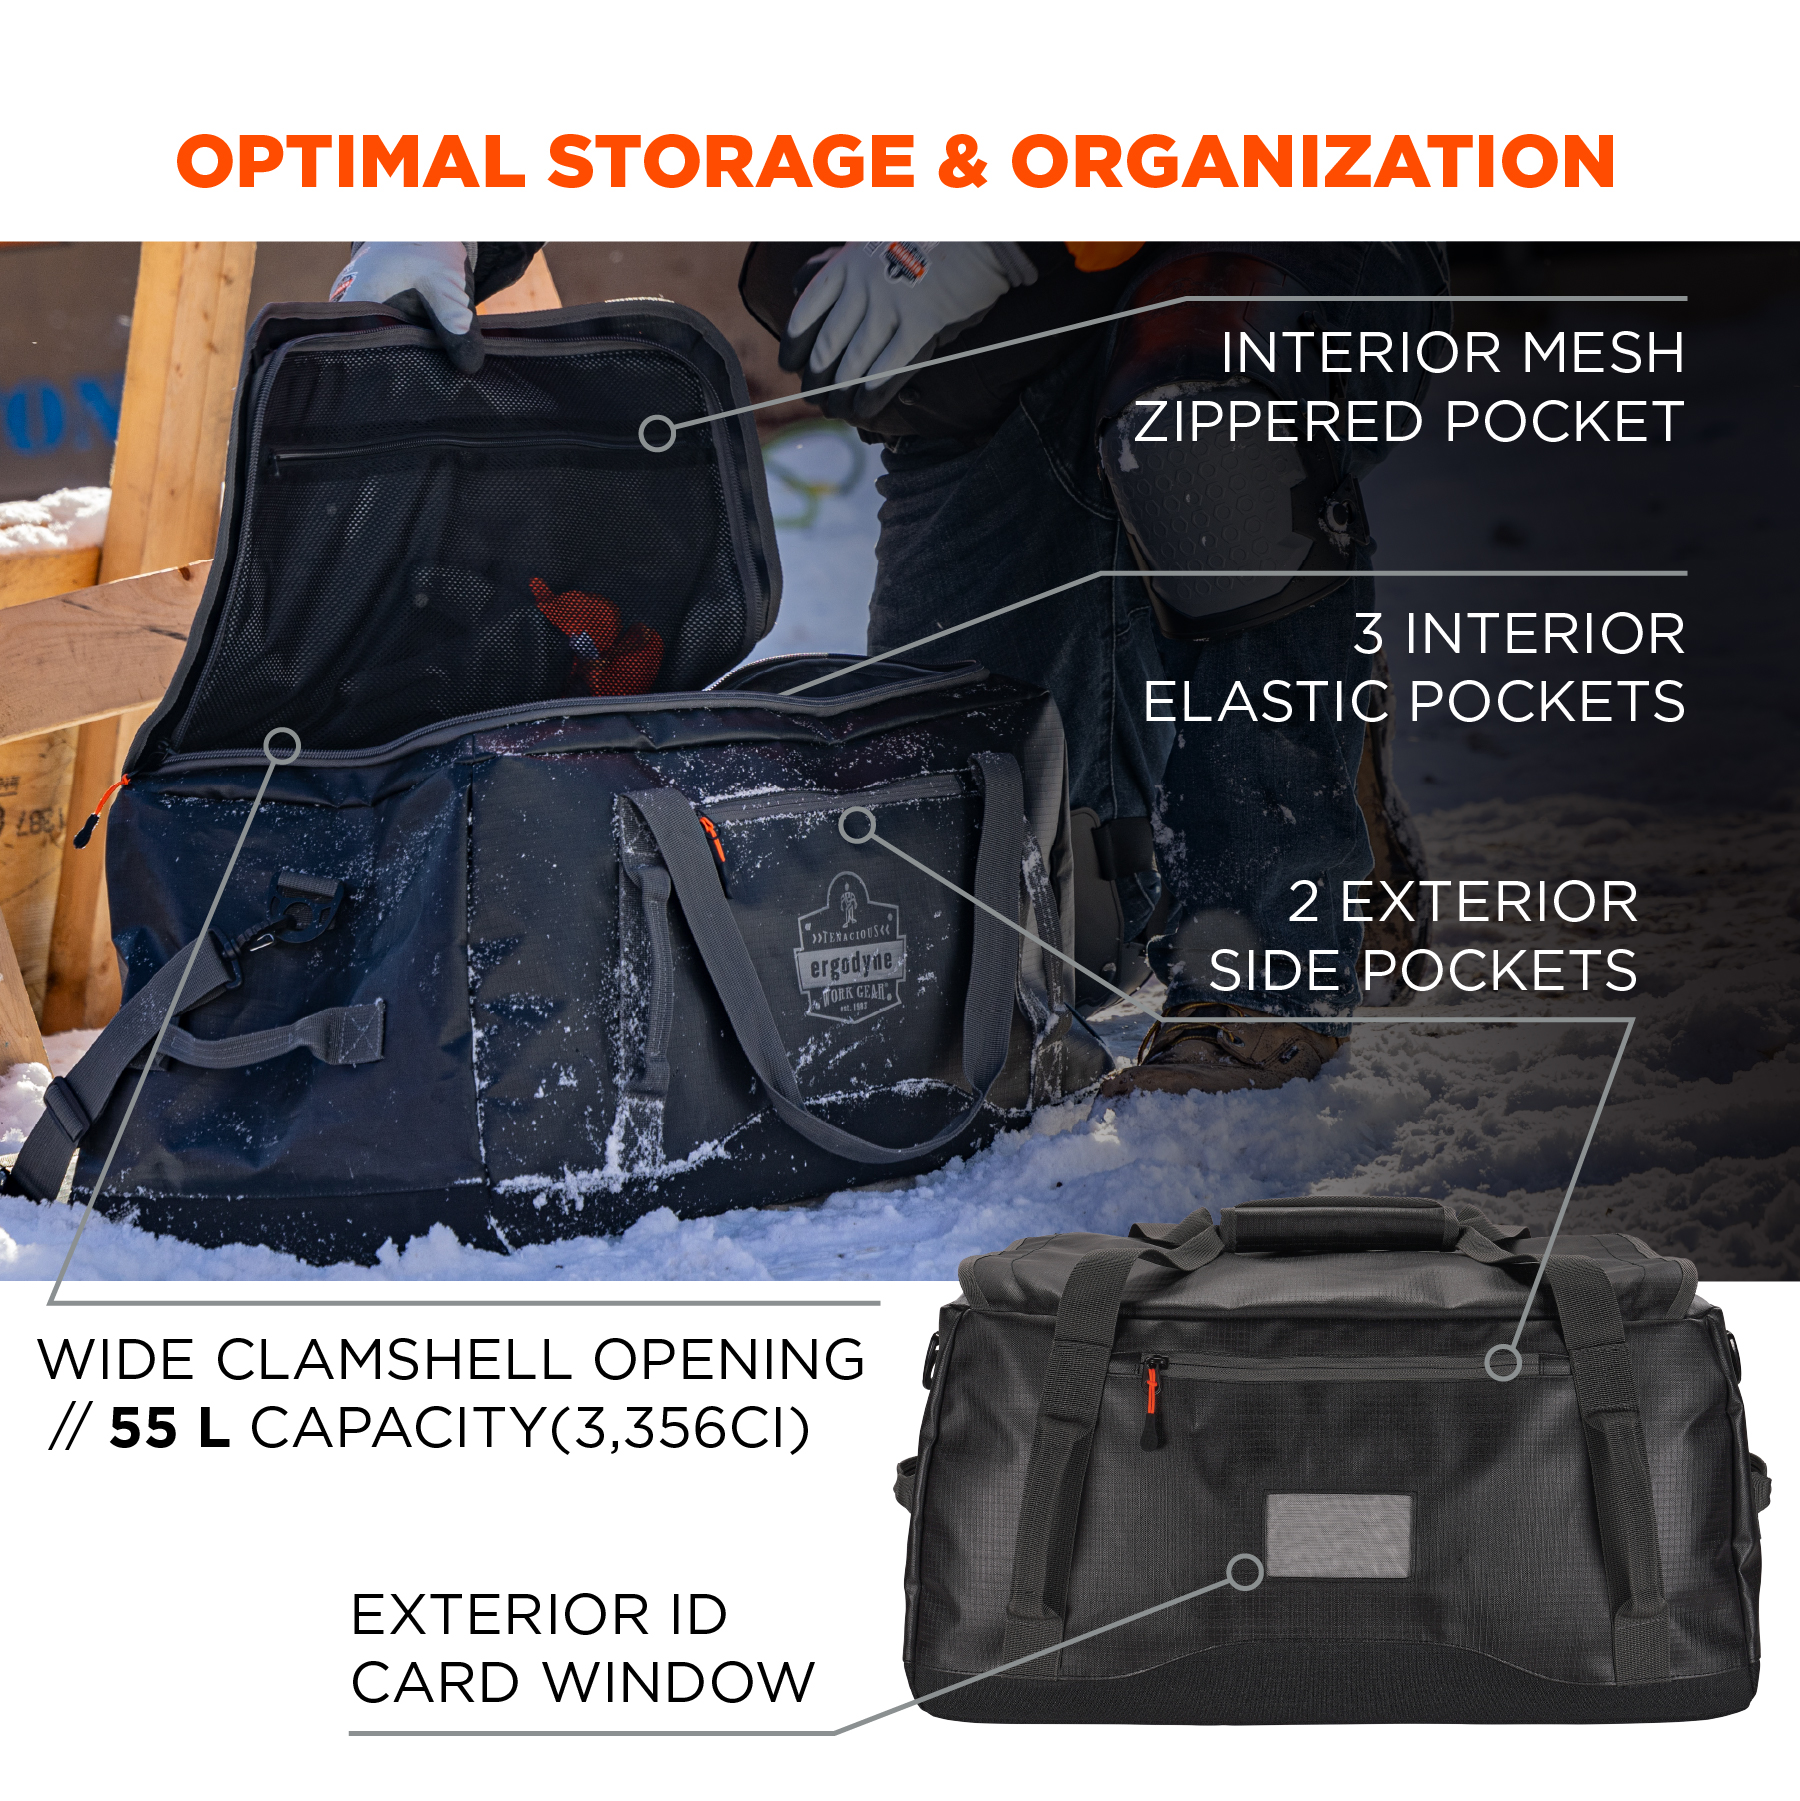 https://www.ergodyne.com/sites/default/files/product-images/13035-5031-water-resistant-duffel-bag-black-optimal-storage-and-organization.jpg